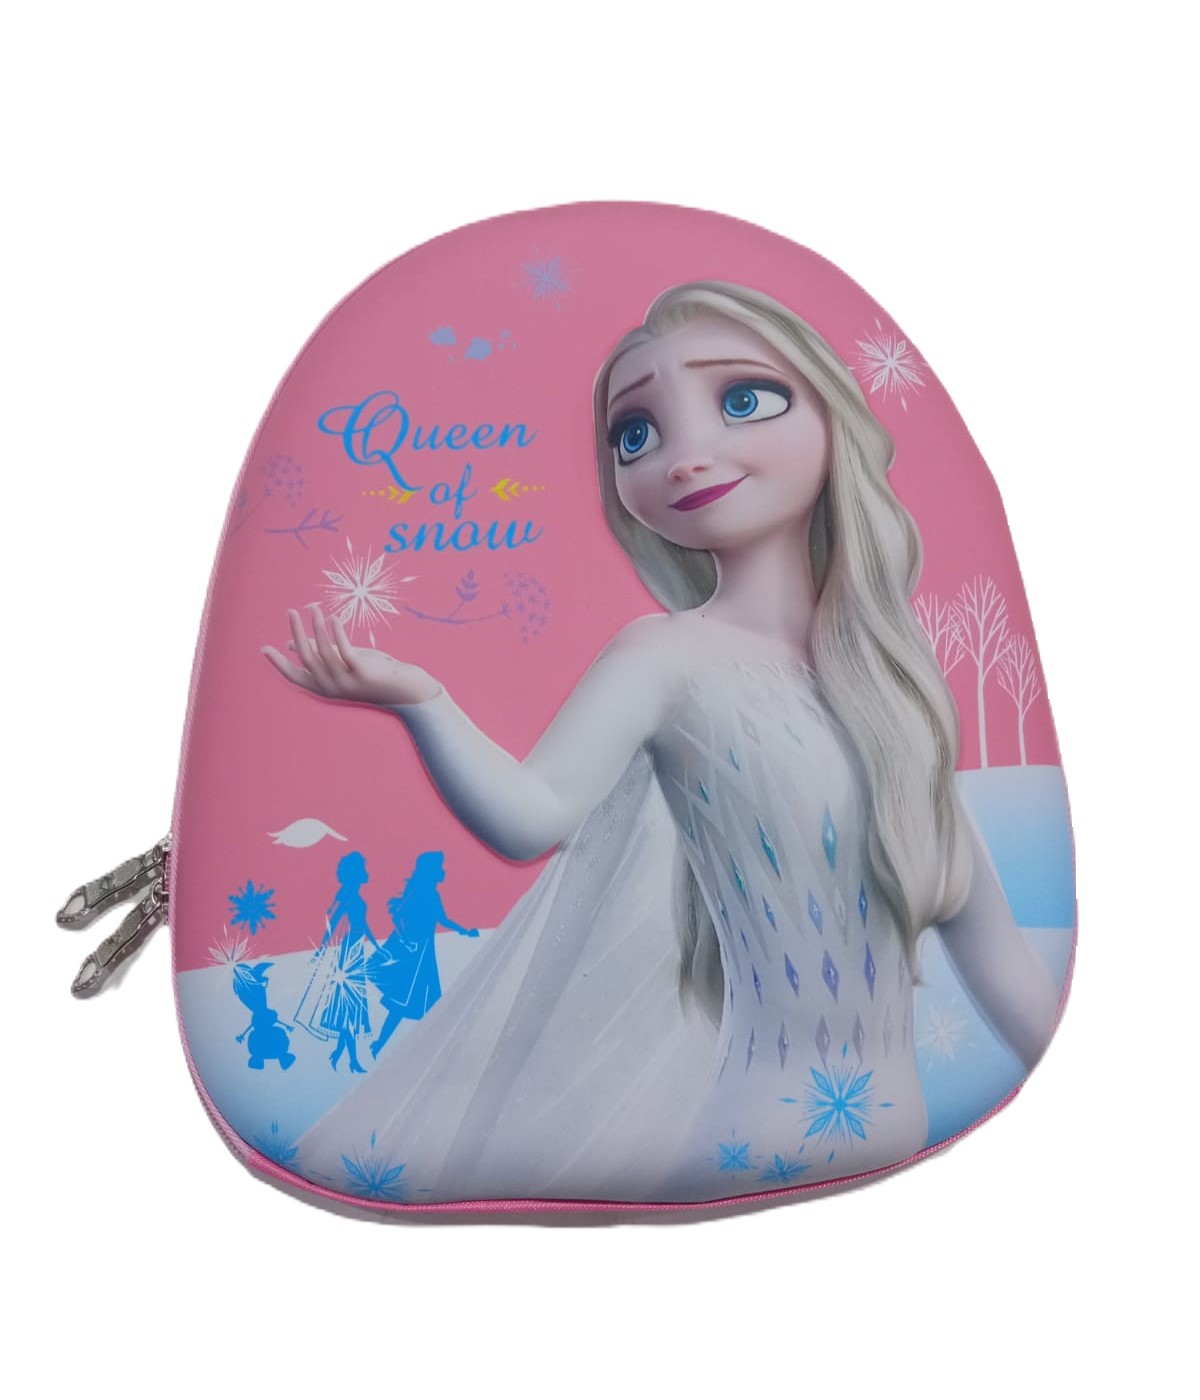 Hard-Case Mini Bags for Kids (Disney Princess Edition)